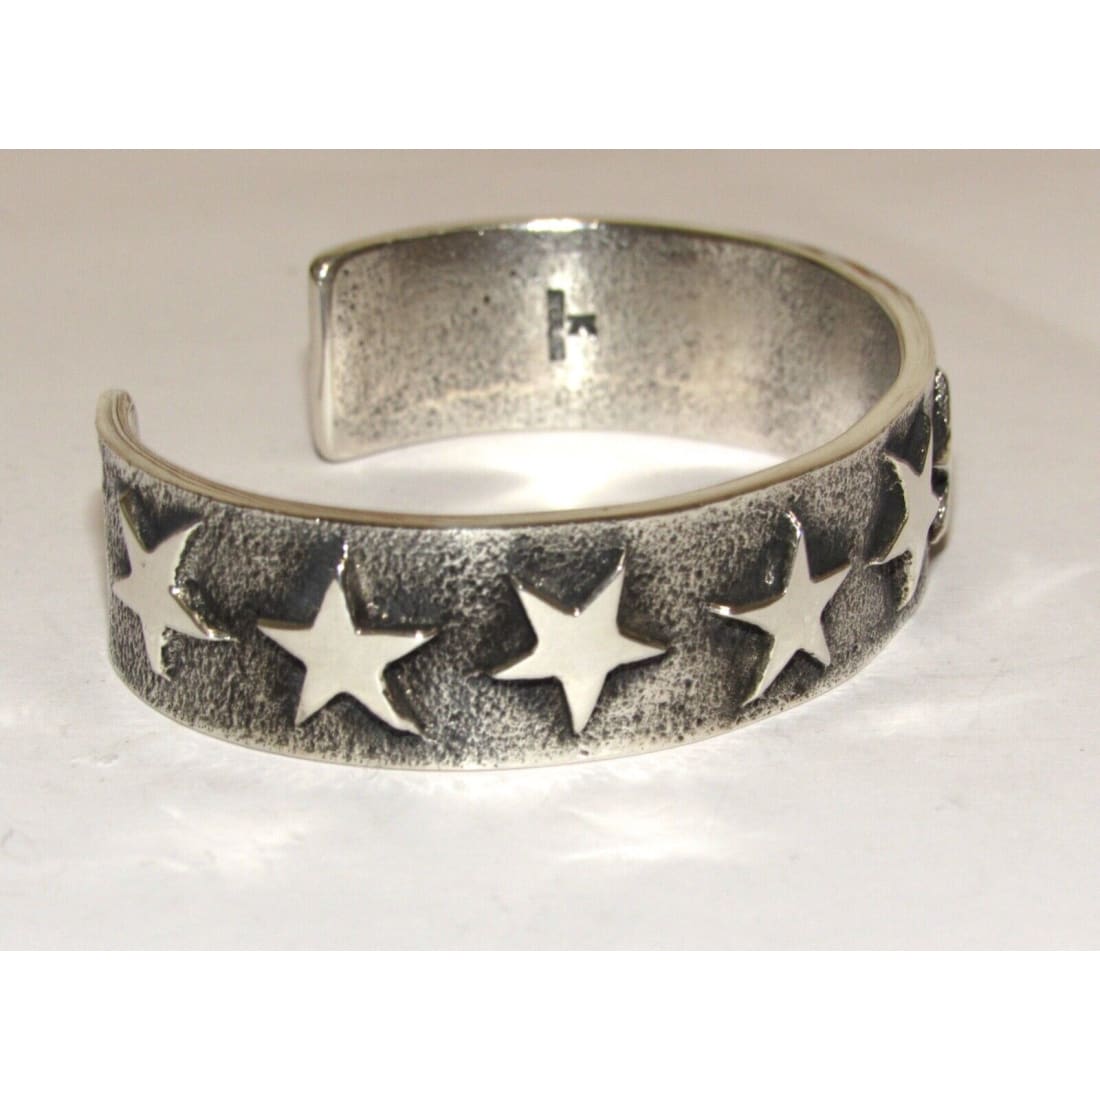 Navajo Tufa Cast Sterling Silver Stars Design Cuff Bracelet